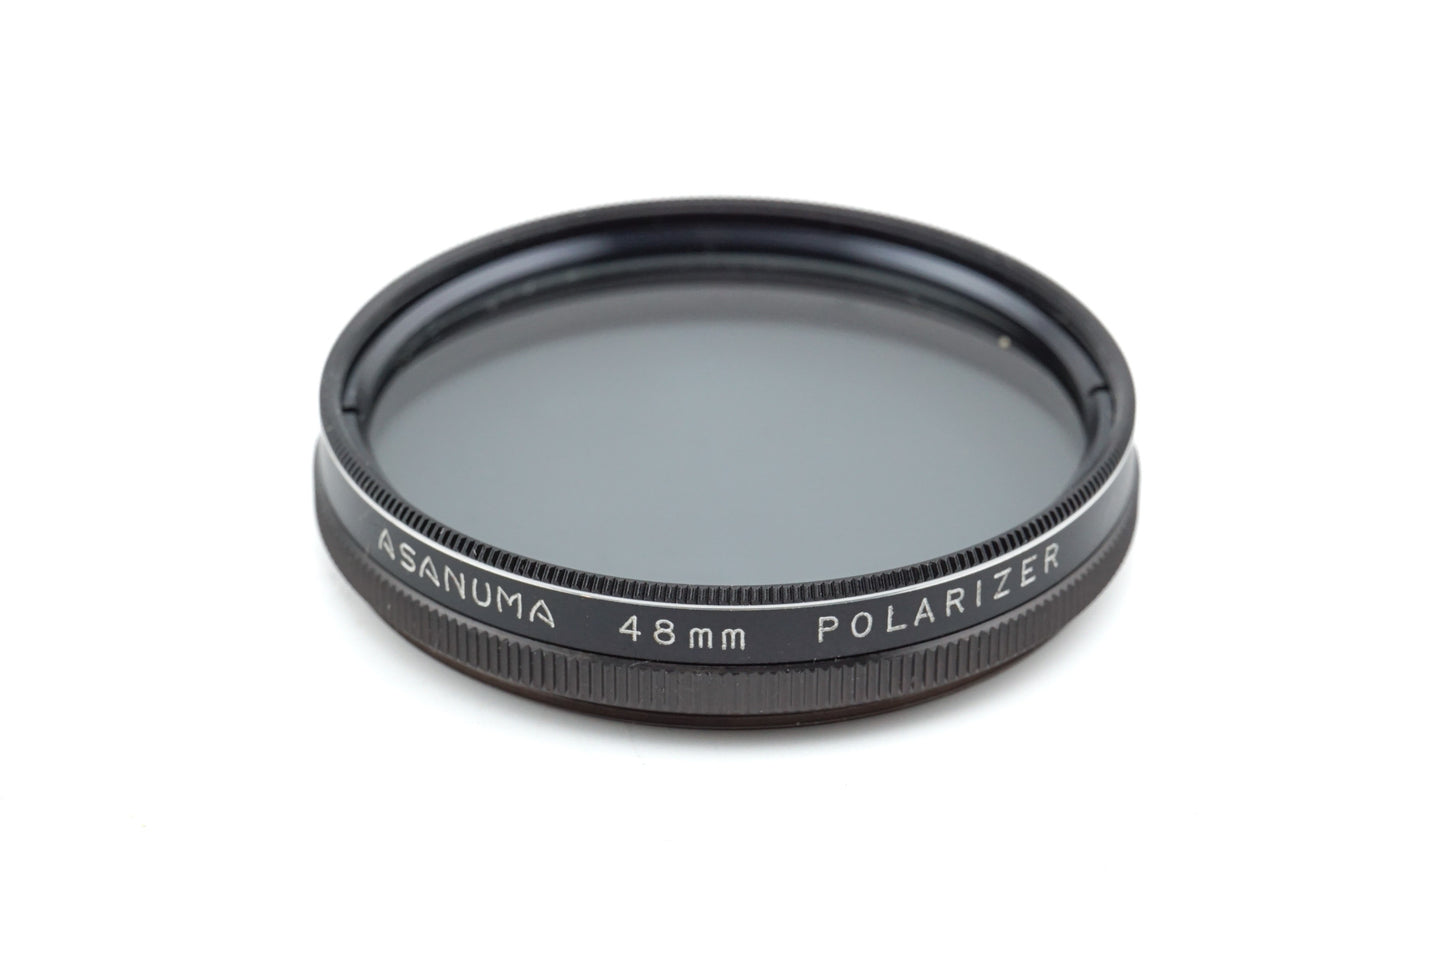 Asanuma 48mm Polarizing Filter